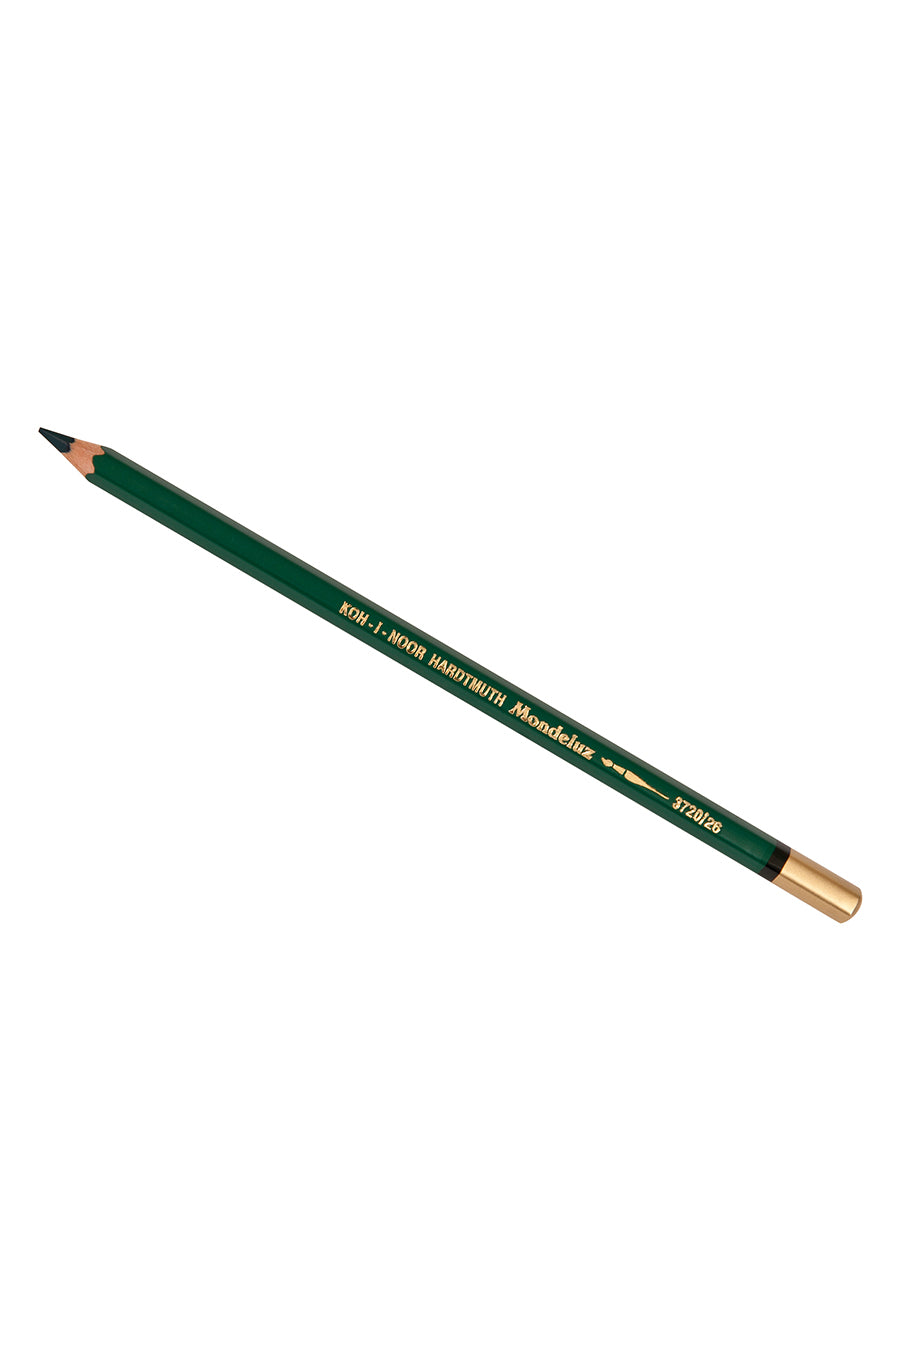 Polycolor® Pencils